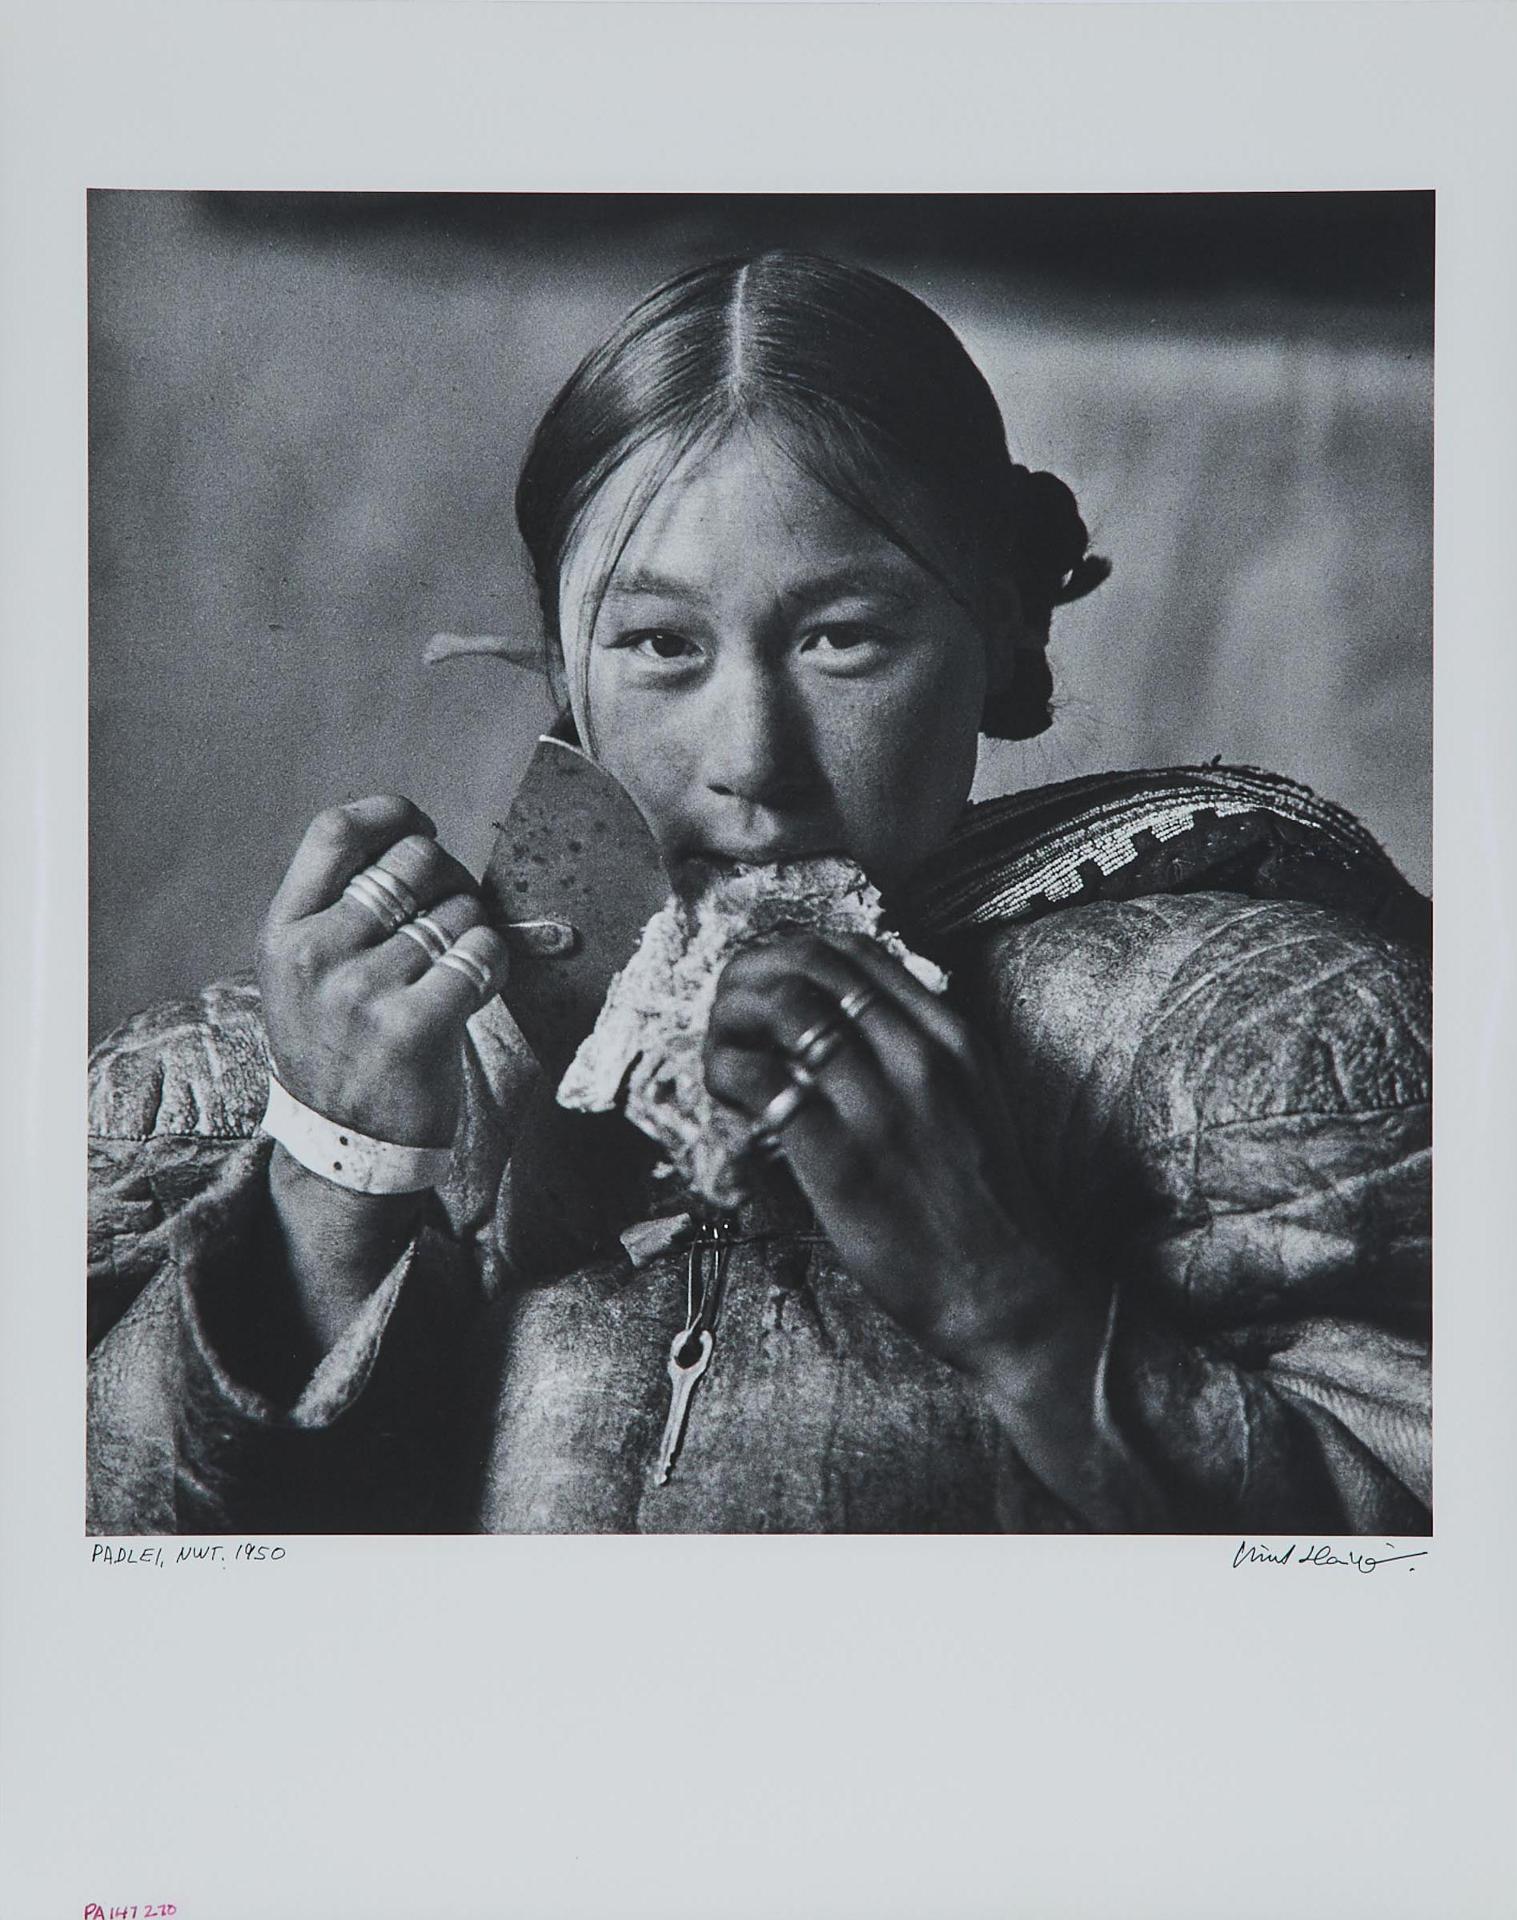 Richard Harrington (1911-2005) - Padlei, Nwt. 1950 [young Girl Eating With Ulu]